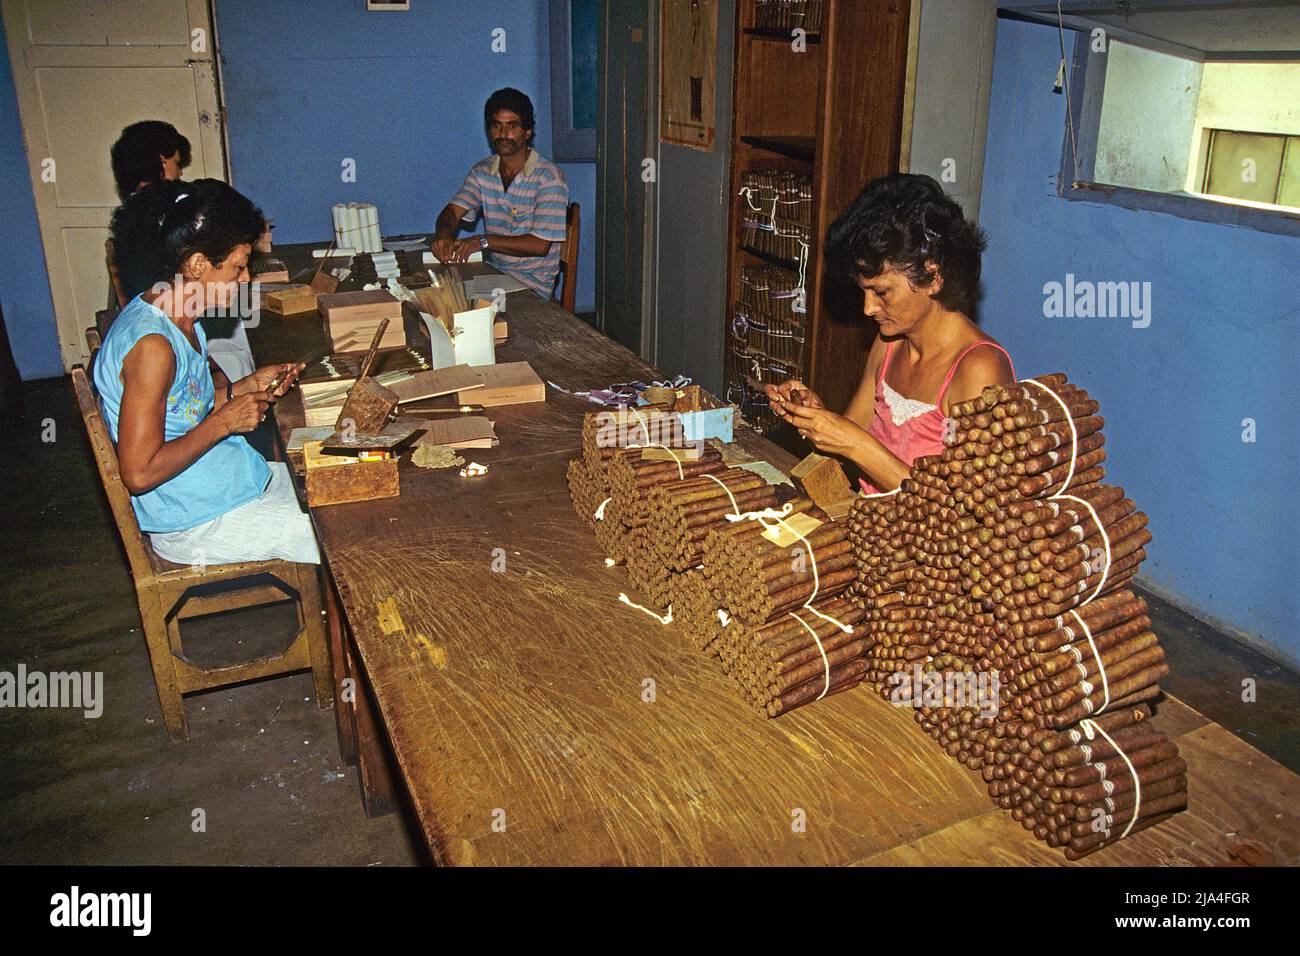 Kubanische Frauen und Maenner drehen echte kubanische Havanna-Zigarren in einer Zigarrenfabrik in Pinar del Rio, Kuba, Karibik | uomo e donna cubana r Foto Stock